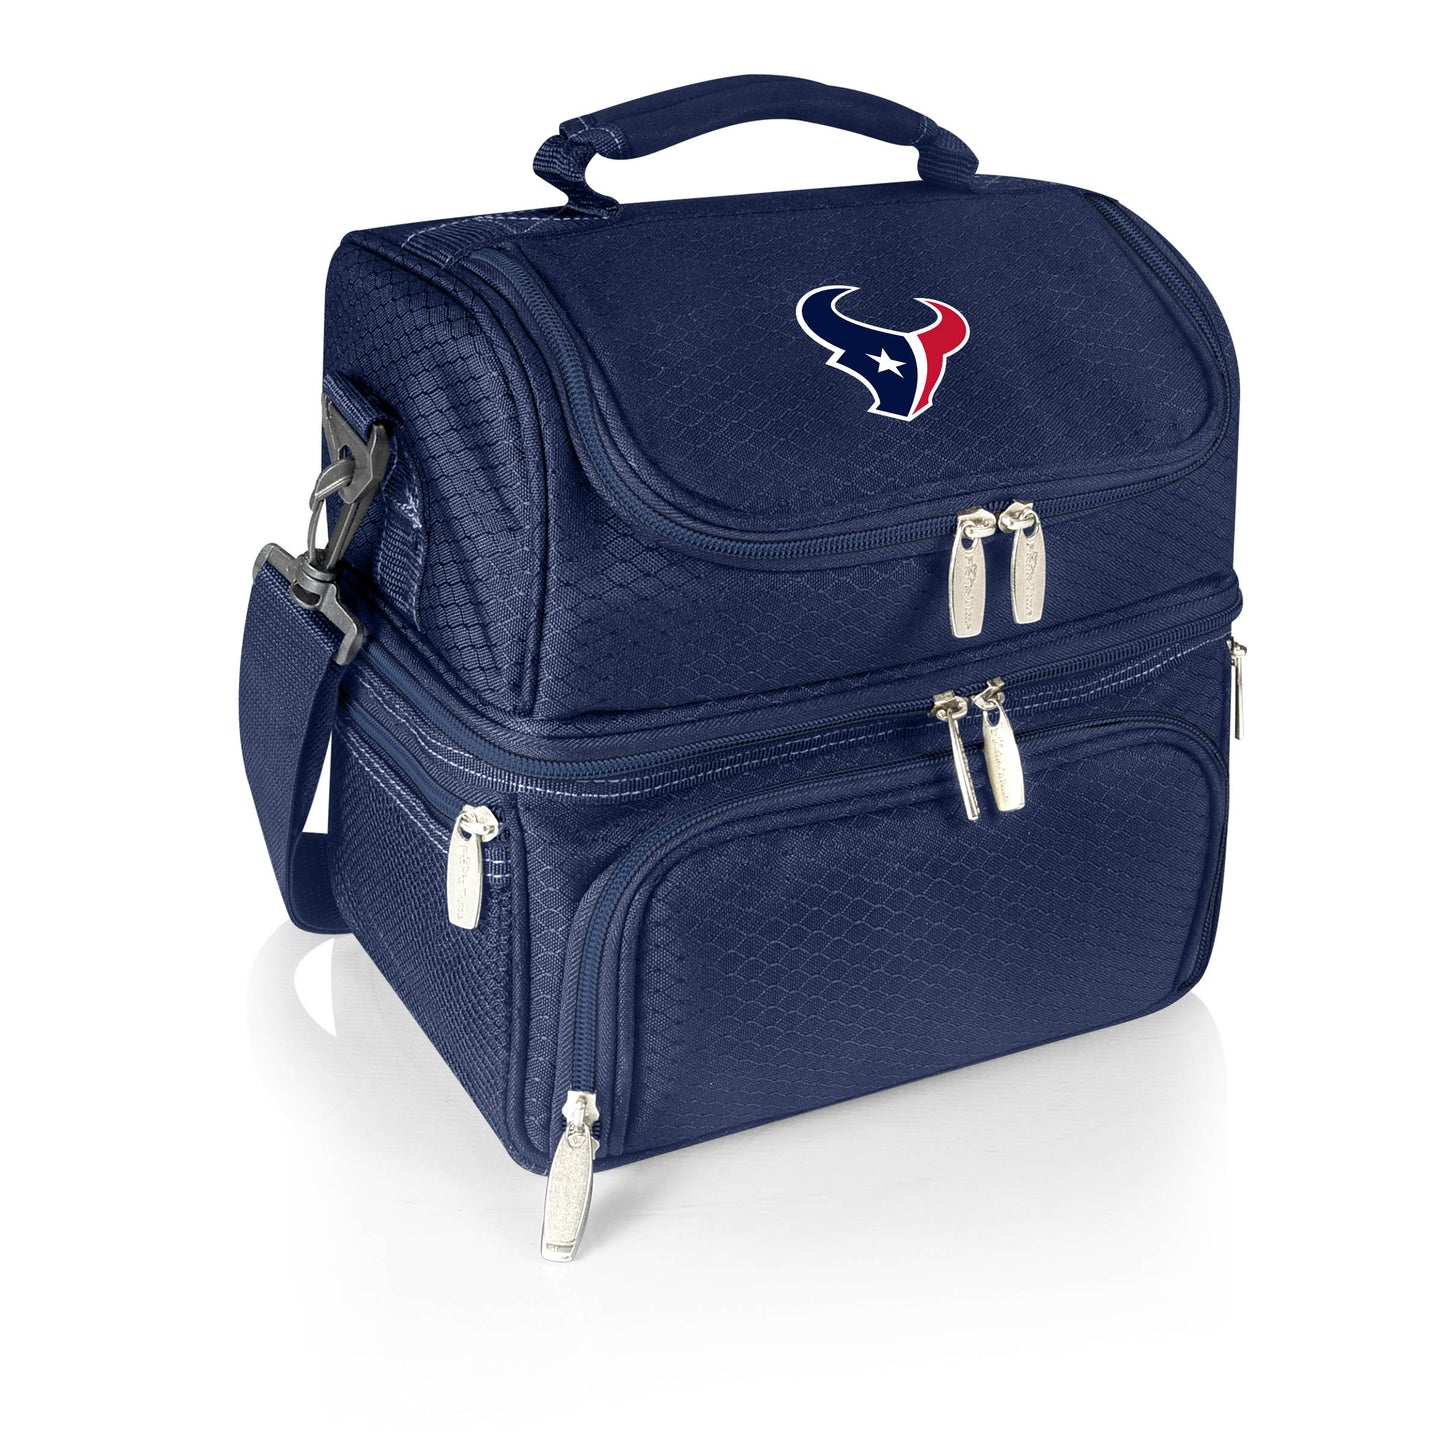 Houston Texans - Pranzo Lunch Cooler Bag